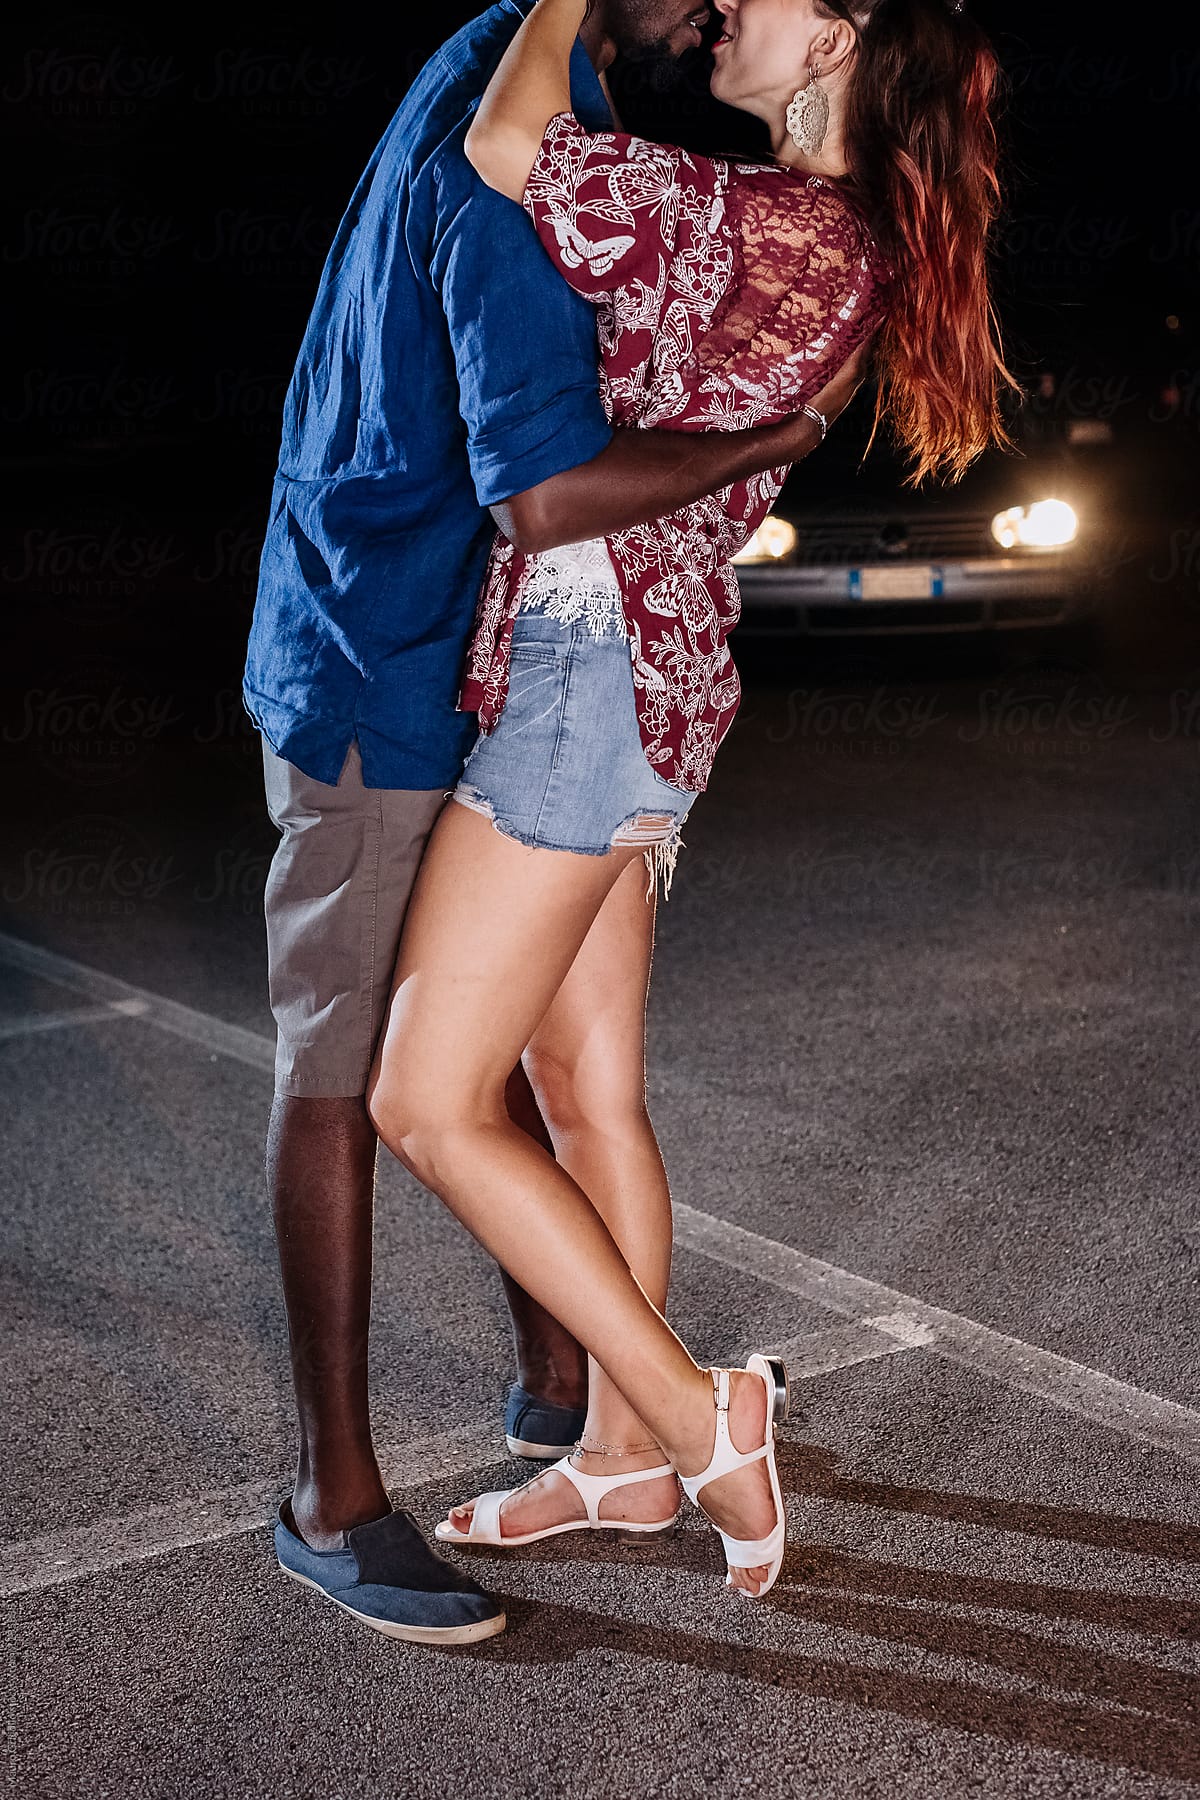 Black Man And A White Woman Kissing On The Street Del Colaborador De Stocksy Mauro Grigollo